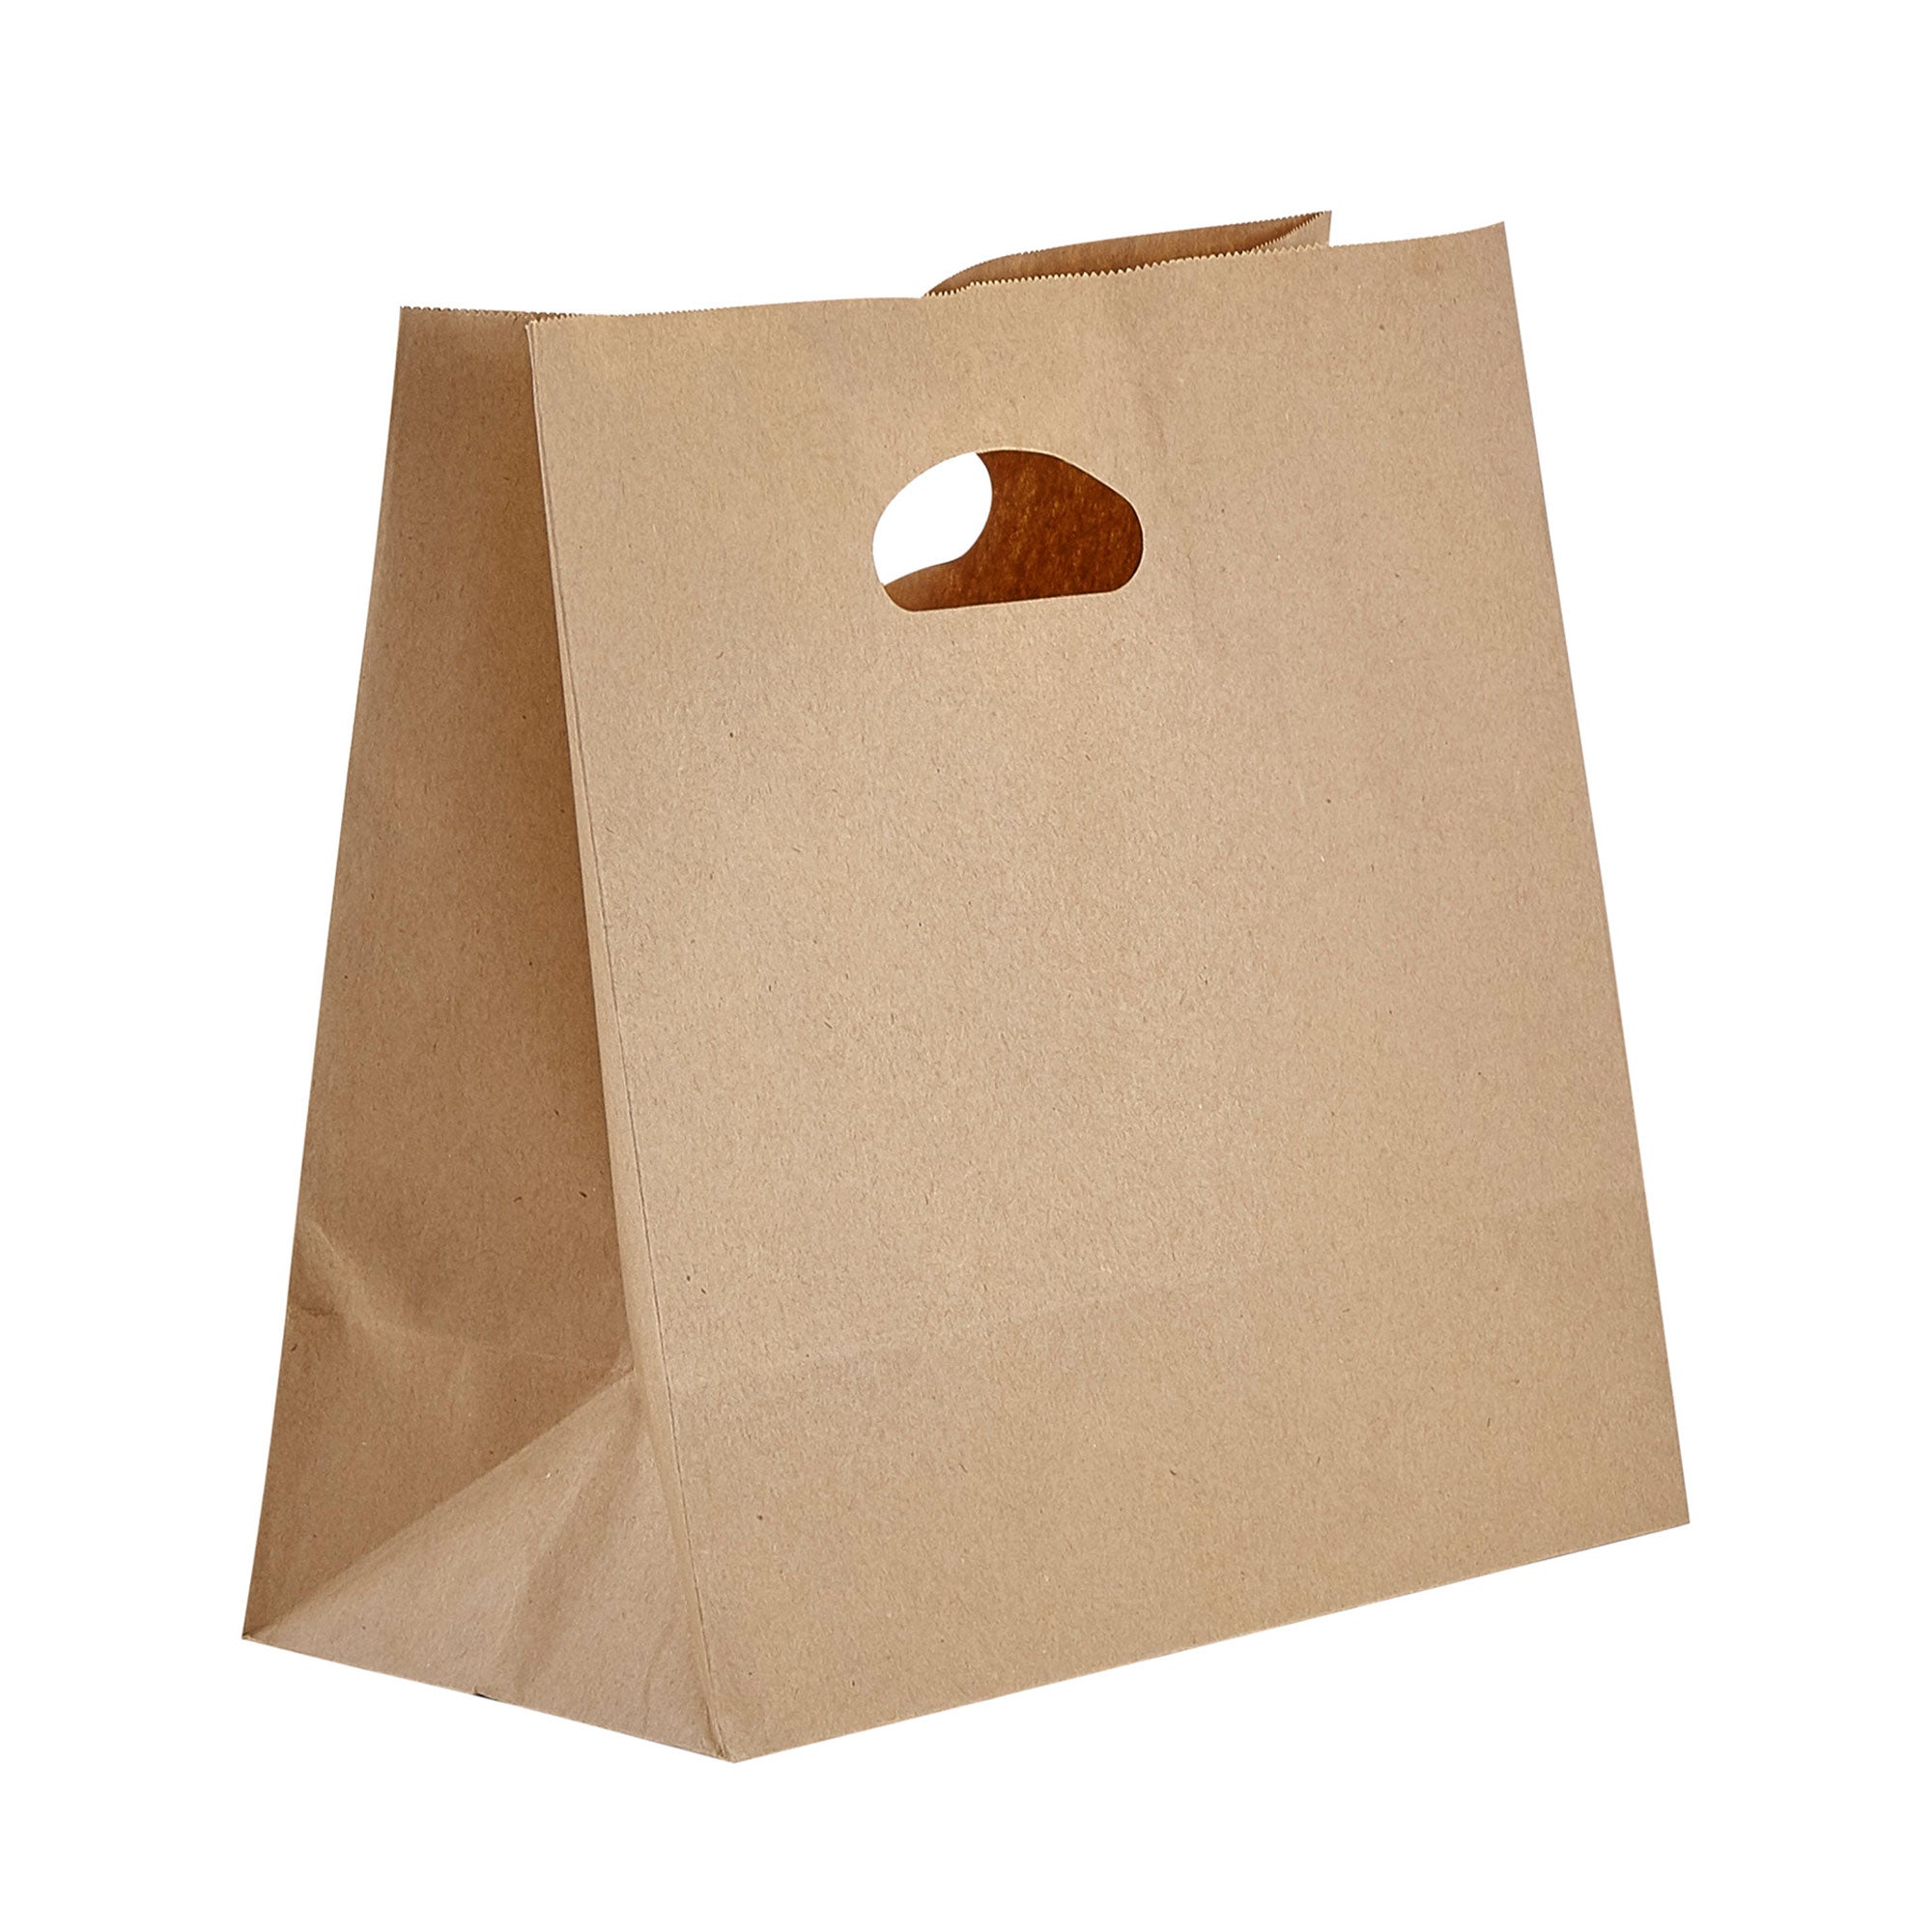 DURO 11x6x11-Inch Kraft Paper Shopping Bag with Handles, Die Cut, 500/CS |  McDonald Paper Supplies